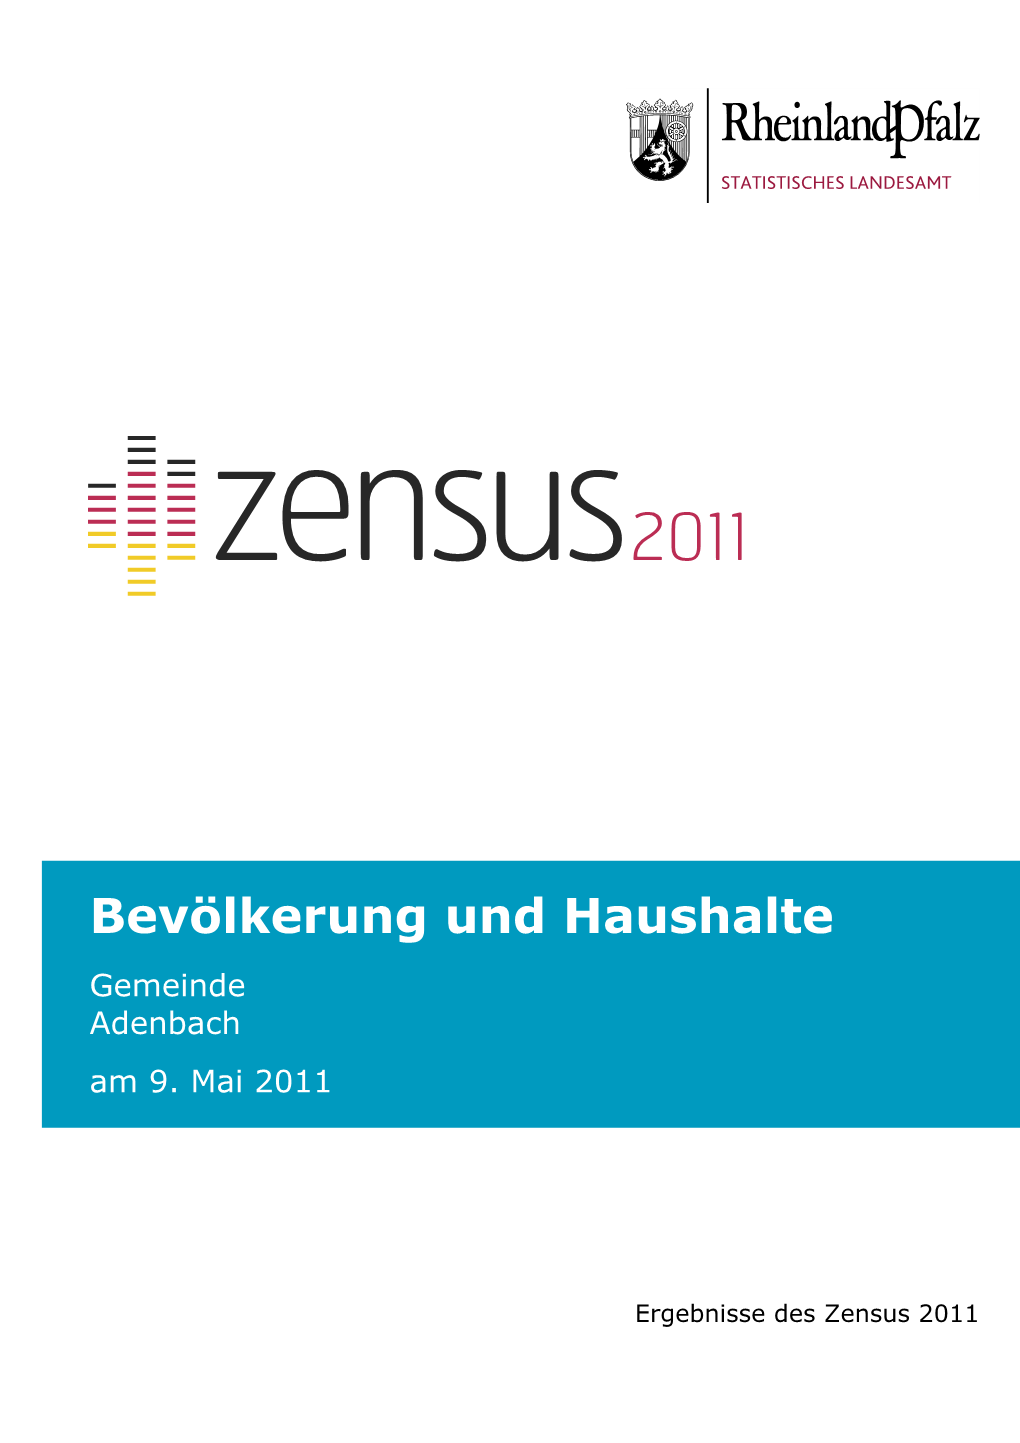 Bevölkerung Und Haushalte Am 9. Mai 2011, Adenbach